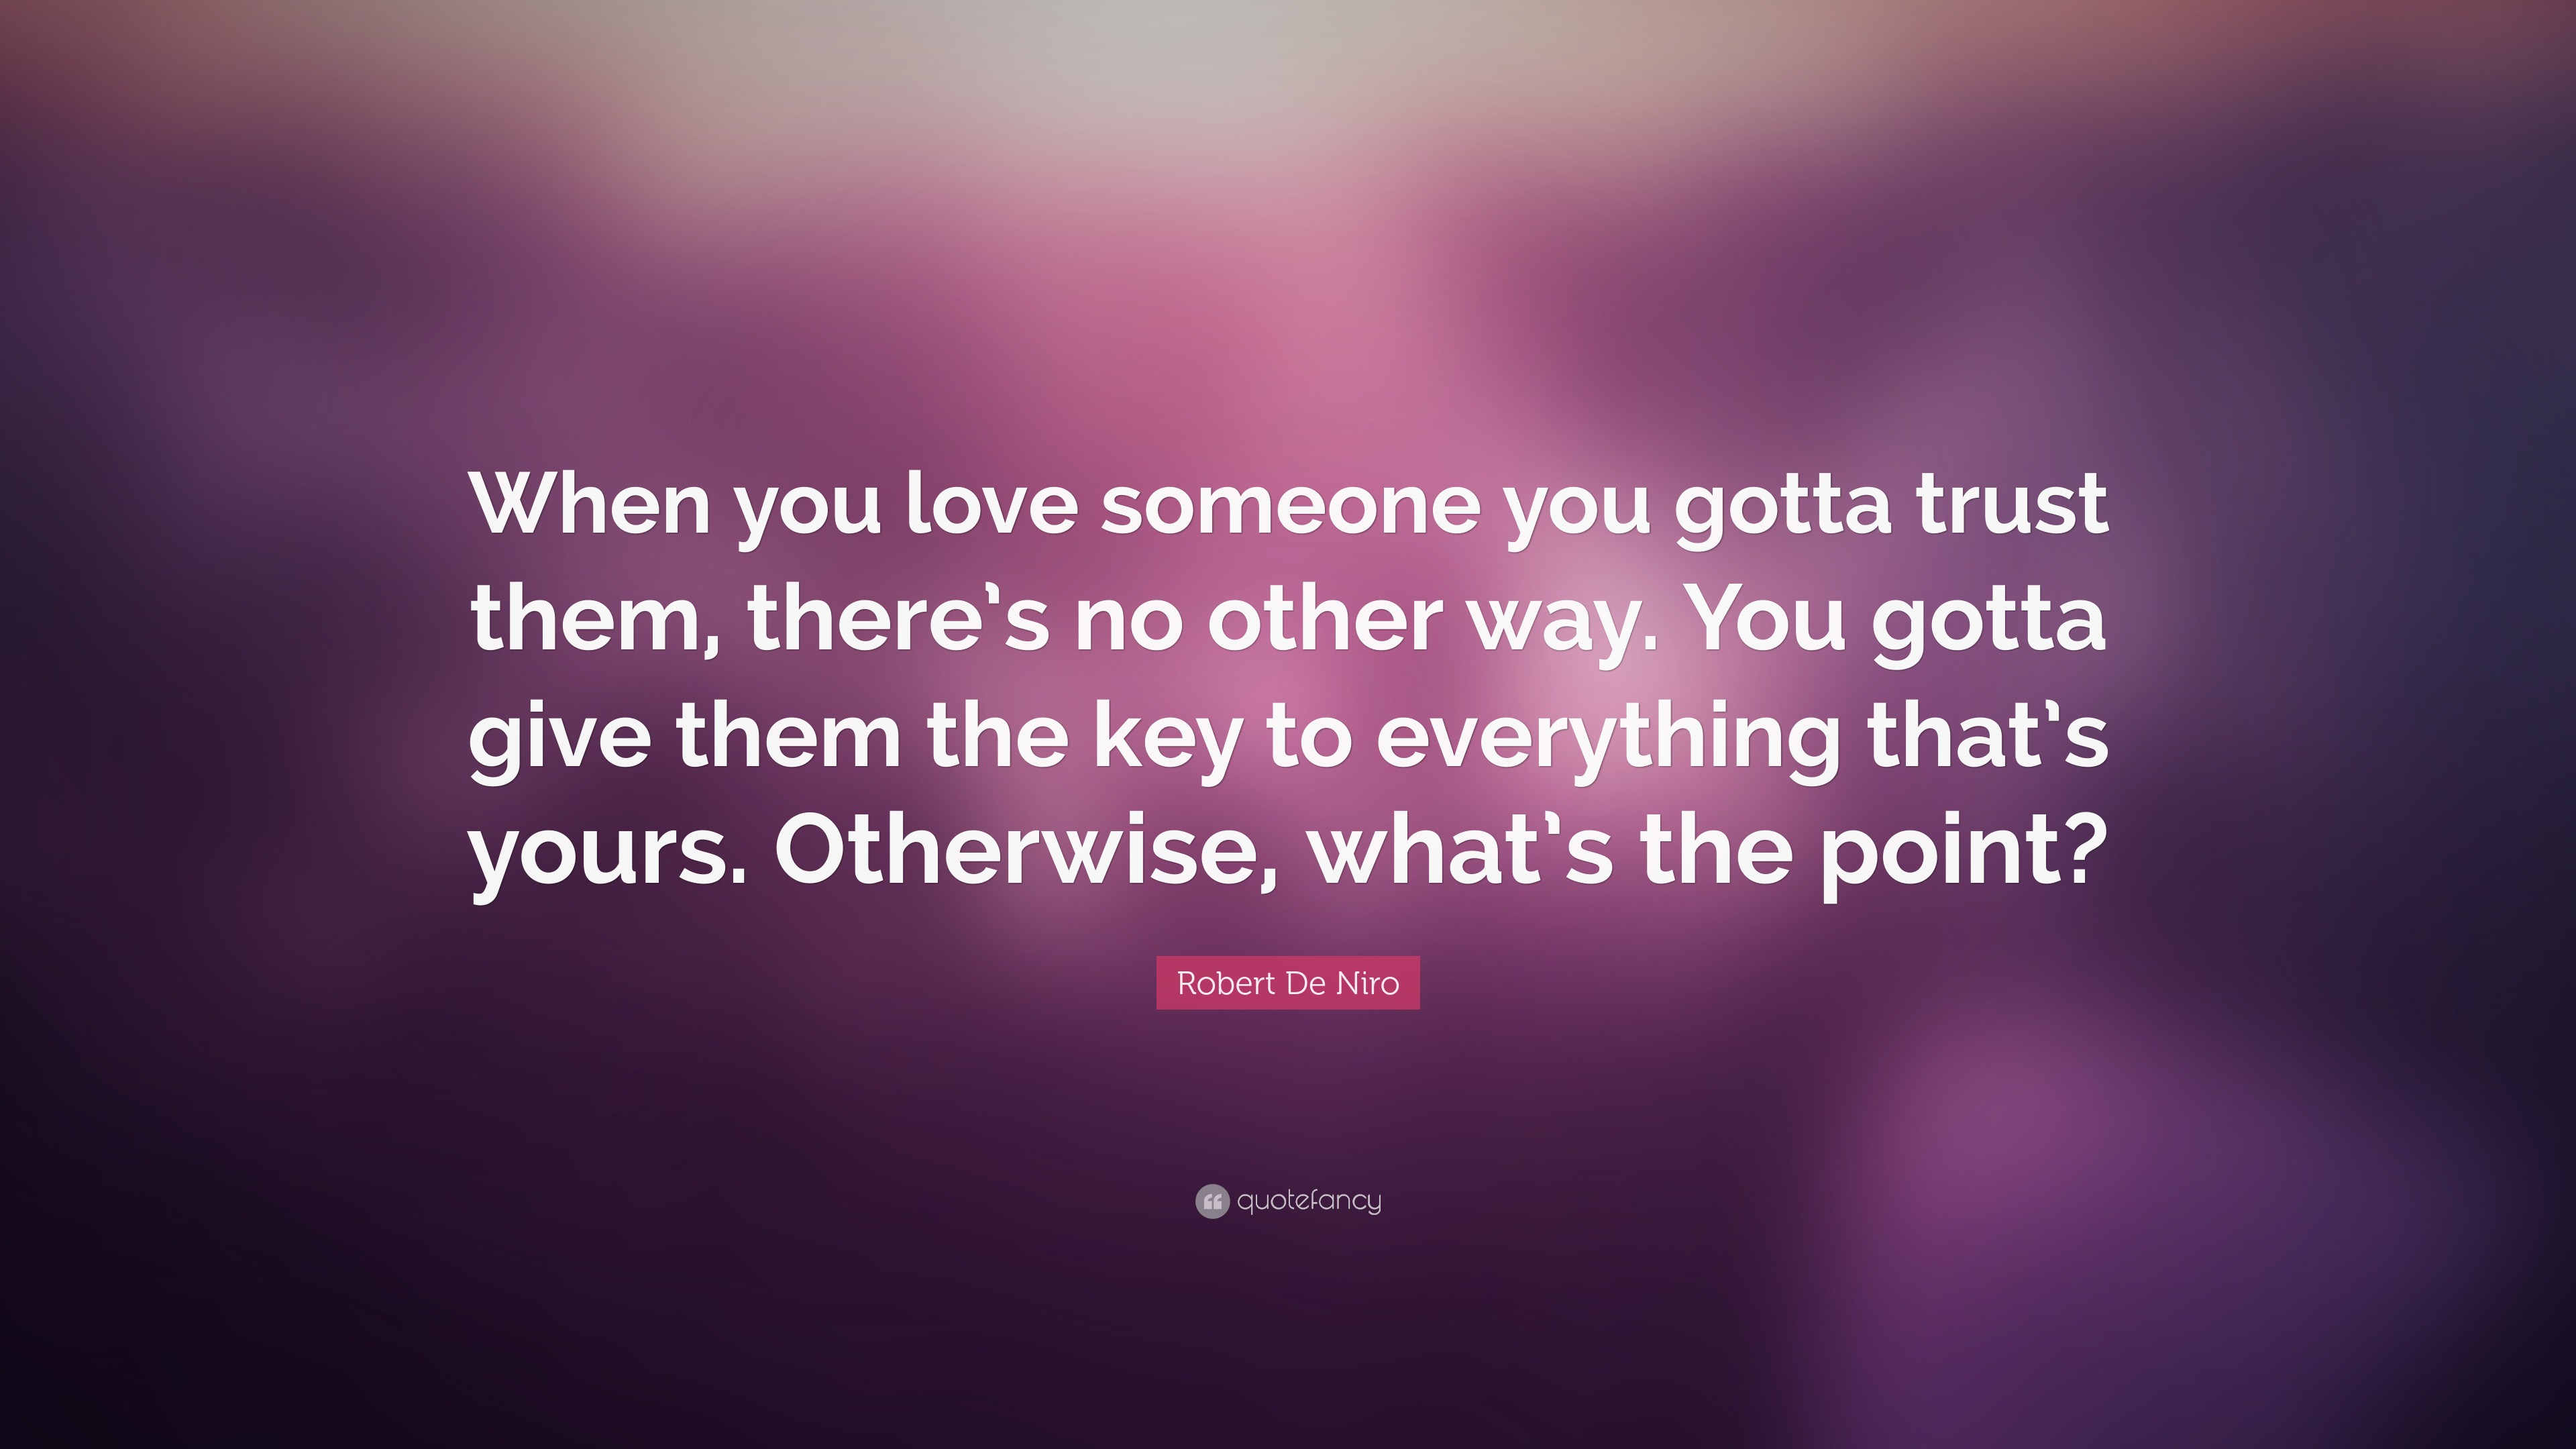 Robert De Niro Quote: “When you love someone you gotta trust them ...